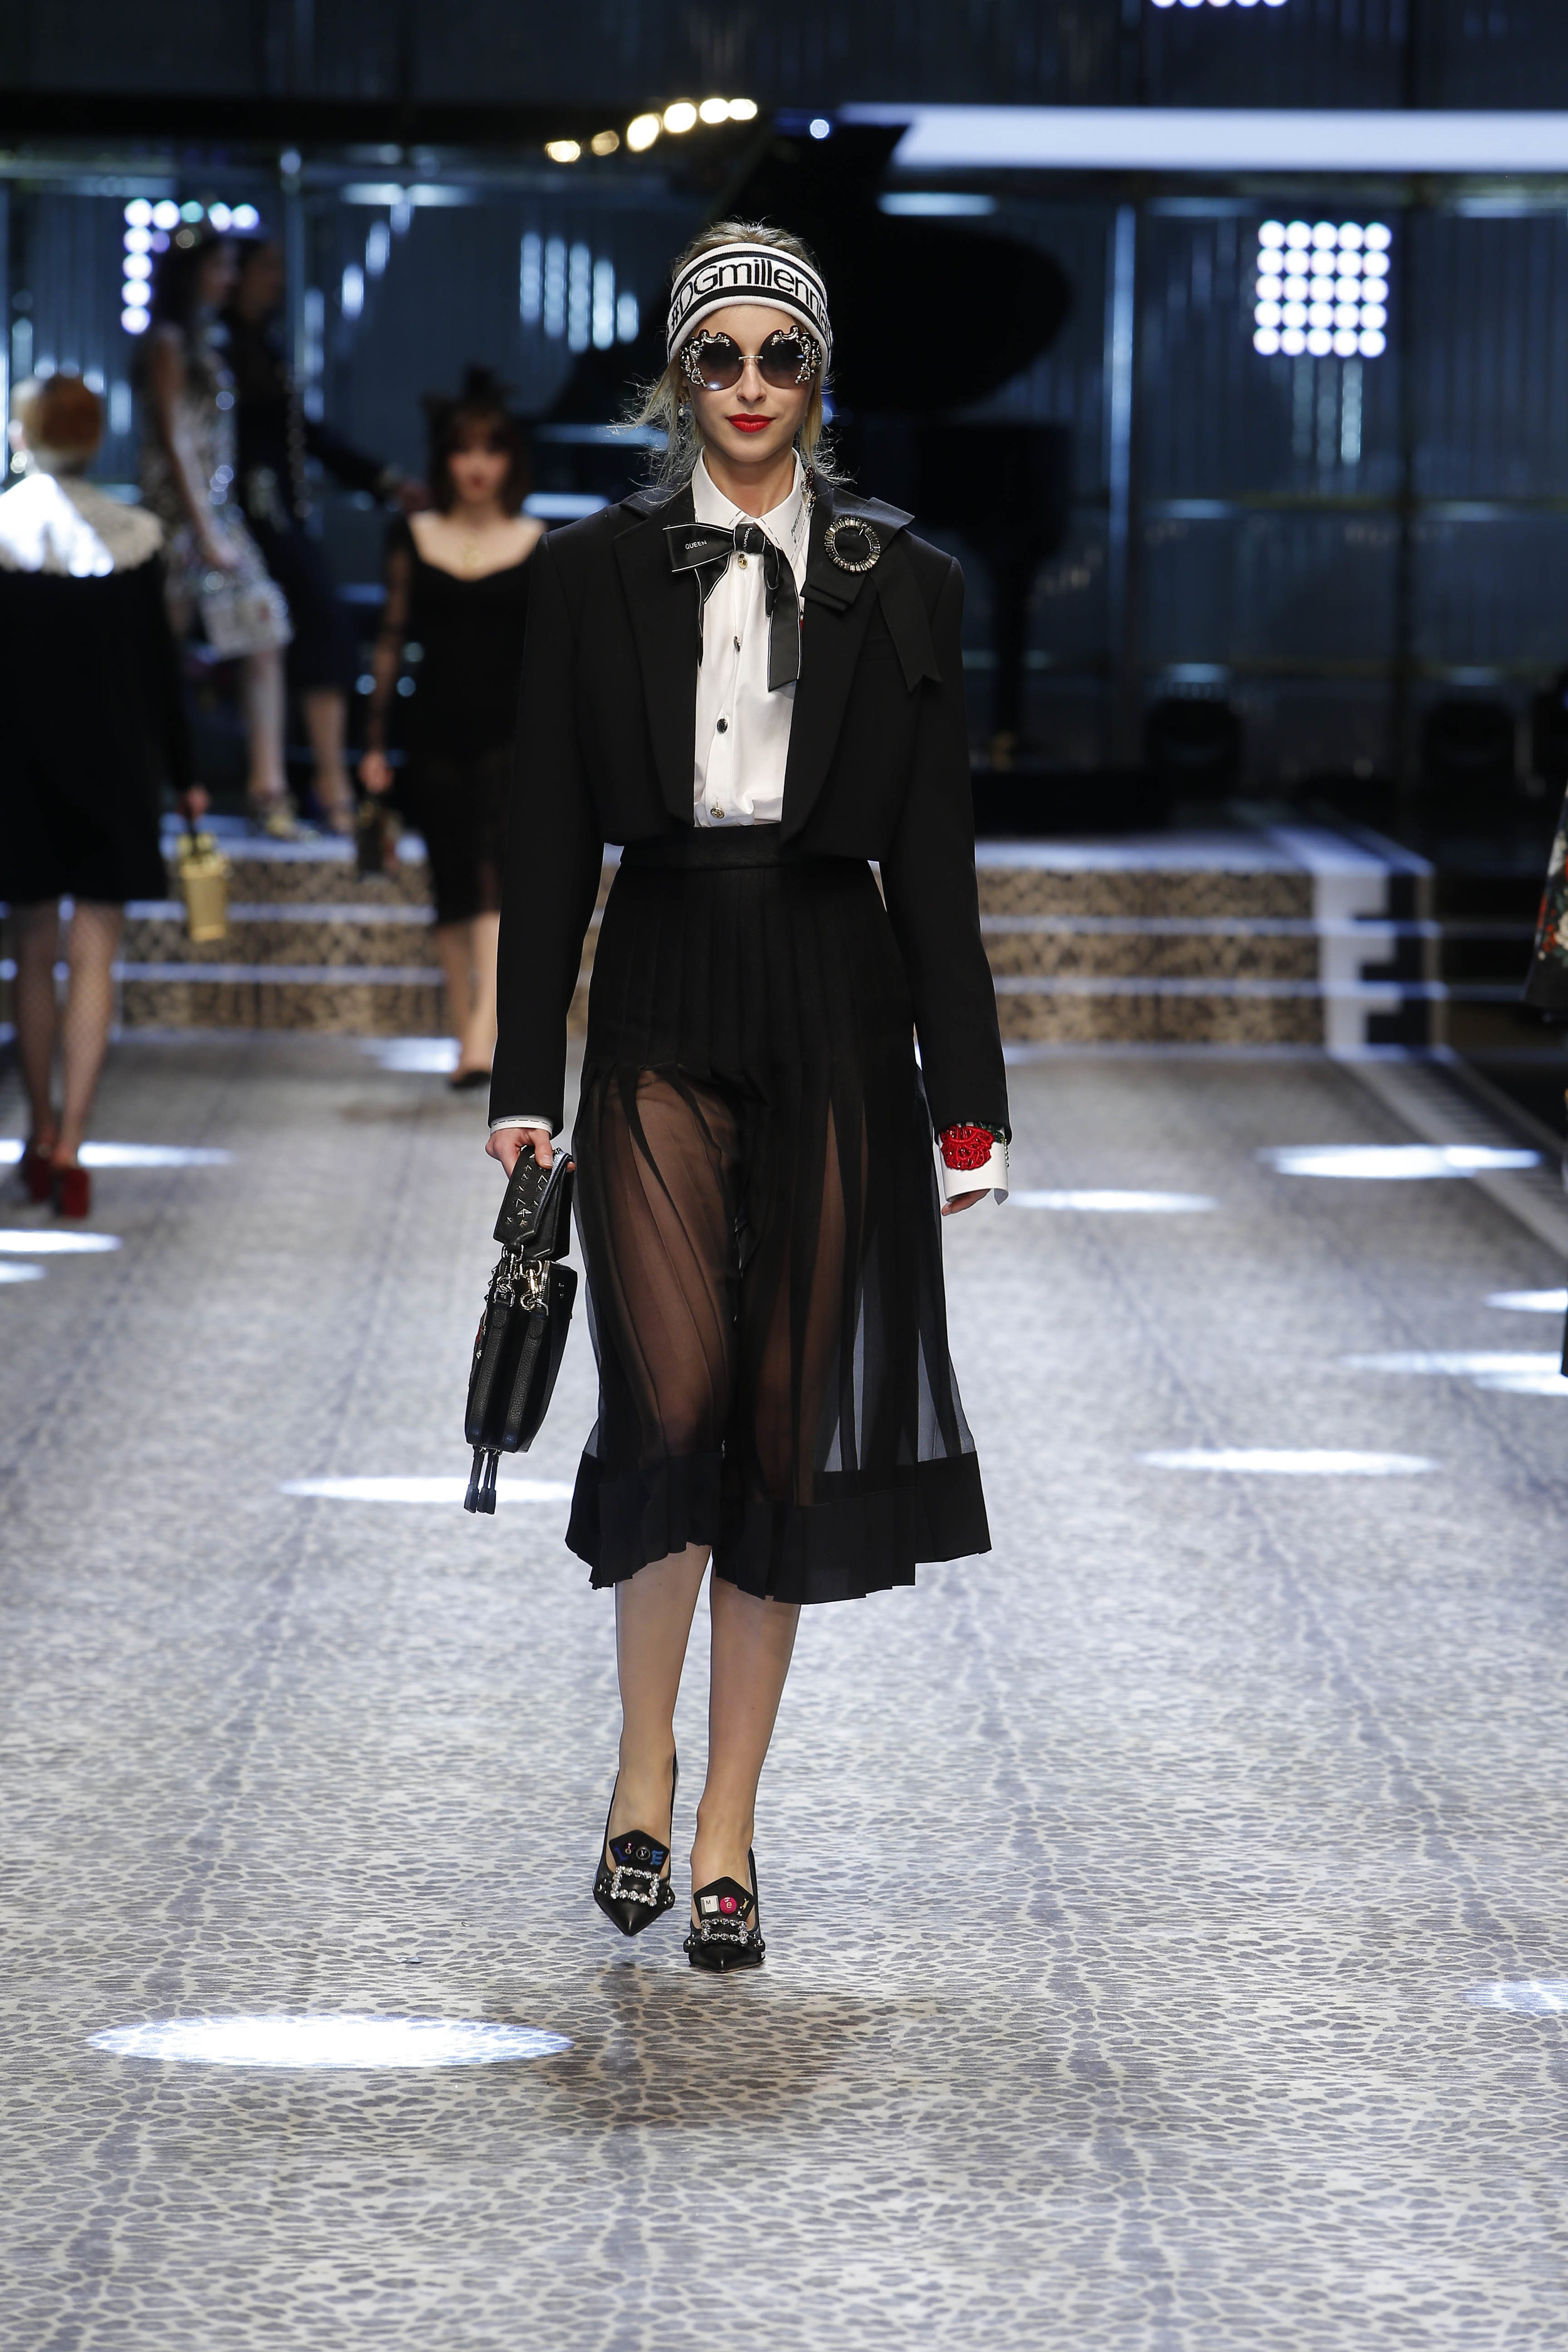 Dolce&Gabbana_women's fashion show fw17-18_Runway_images (28).jpg